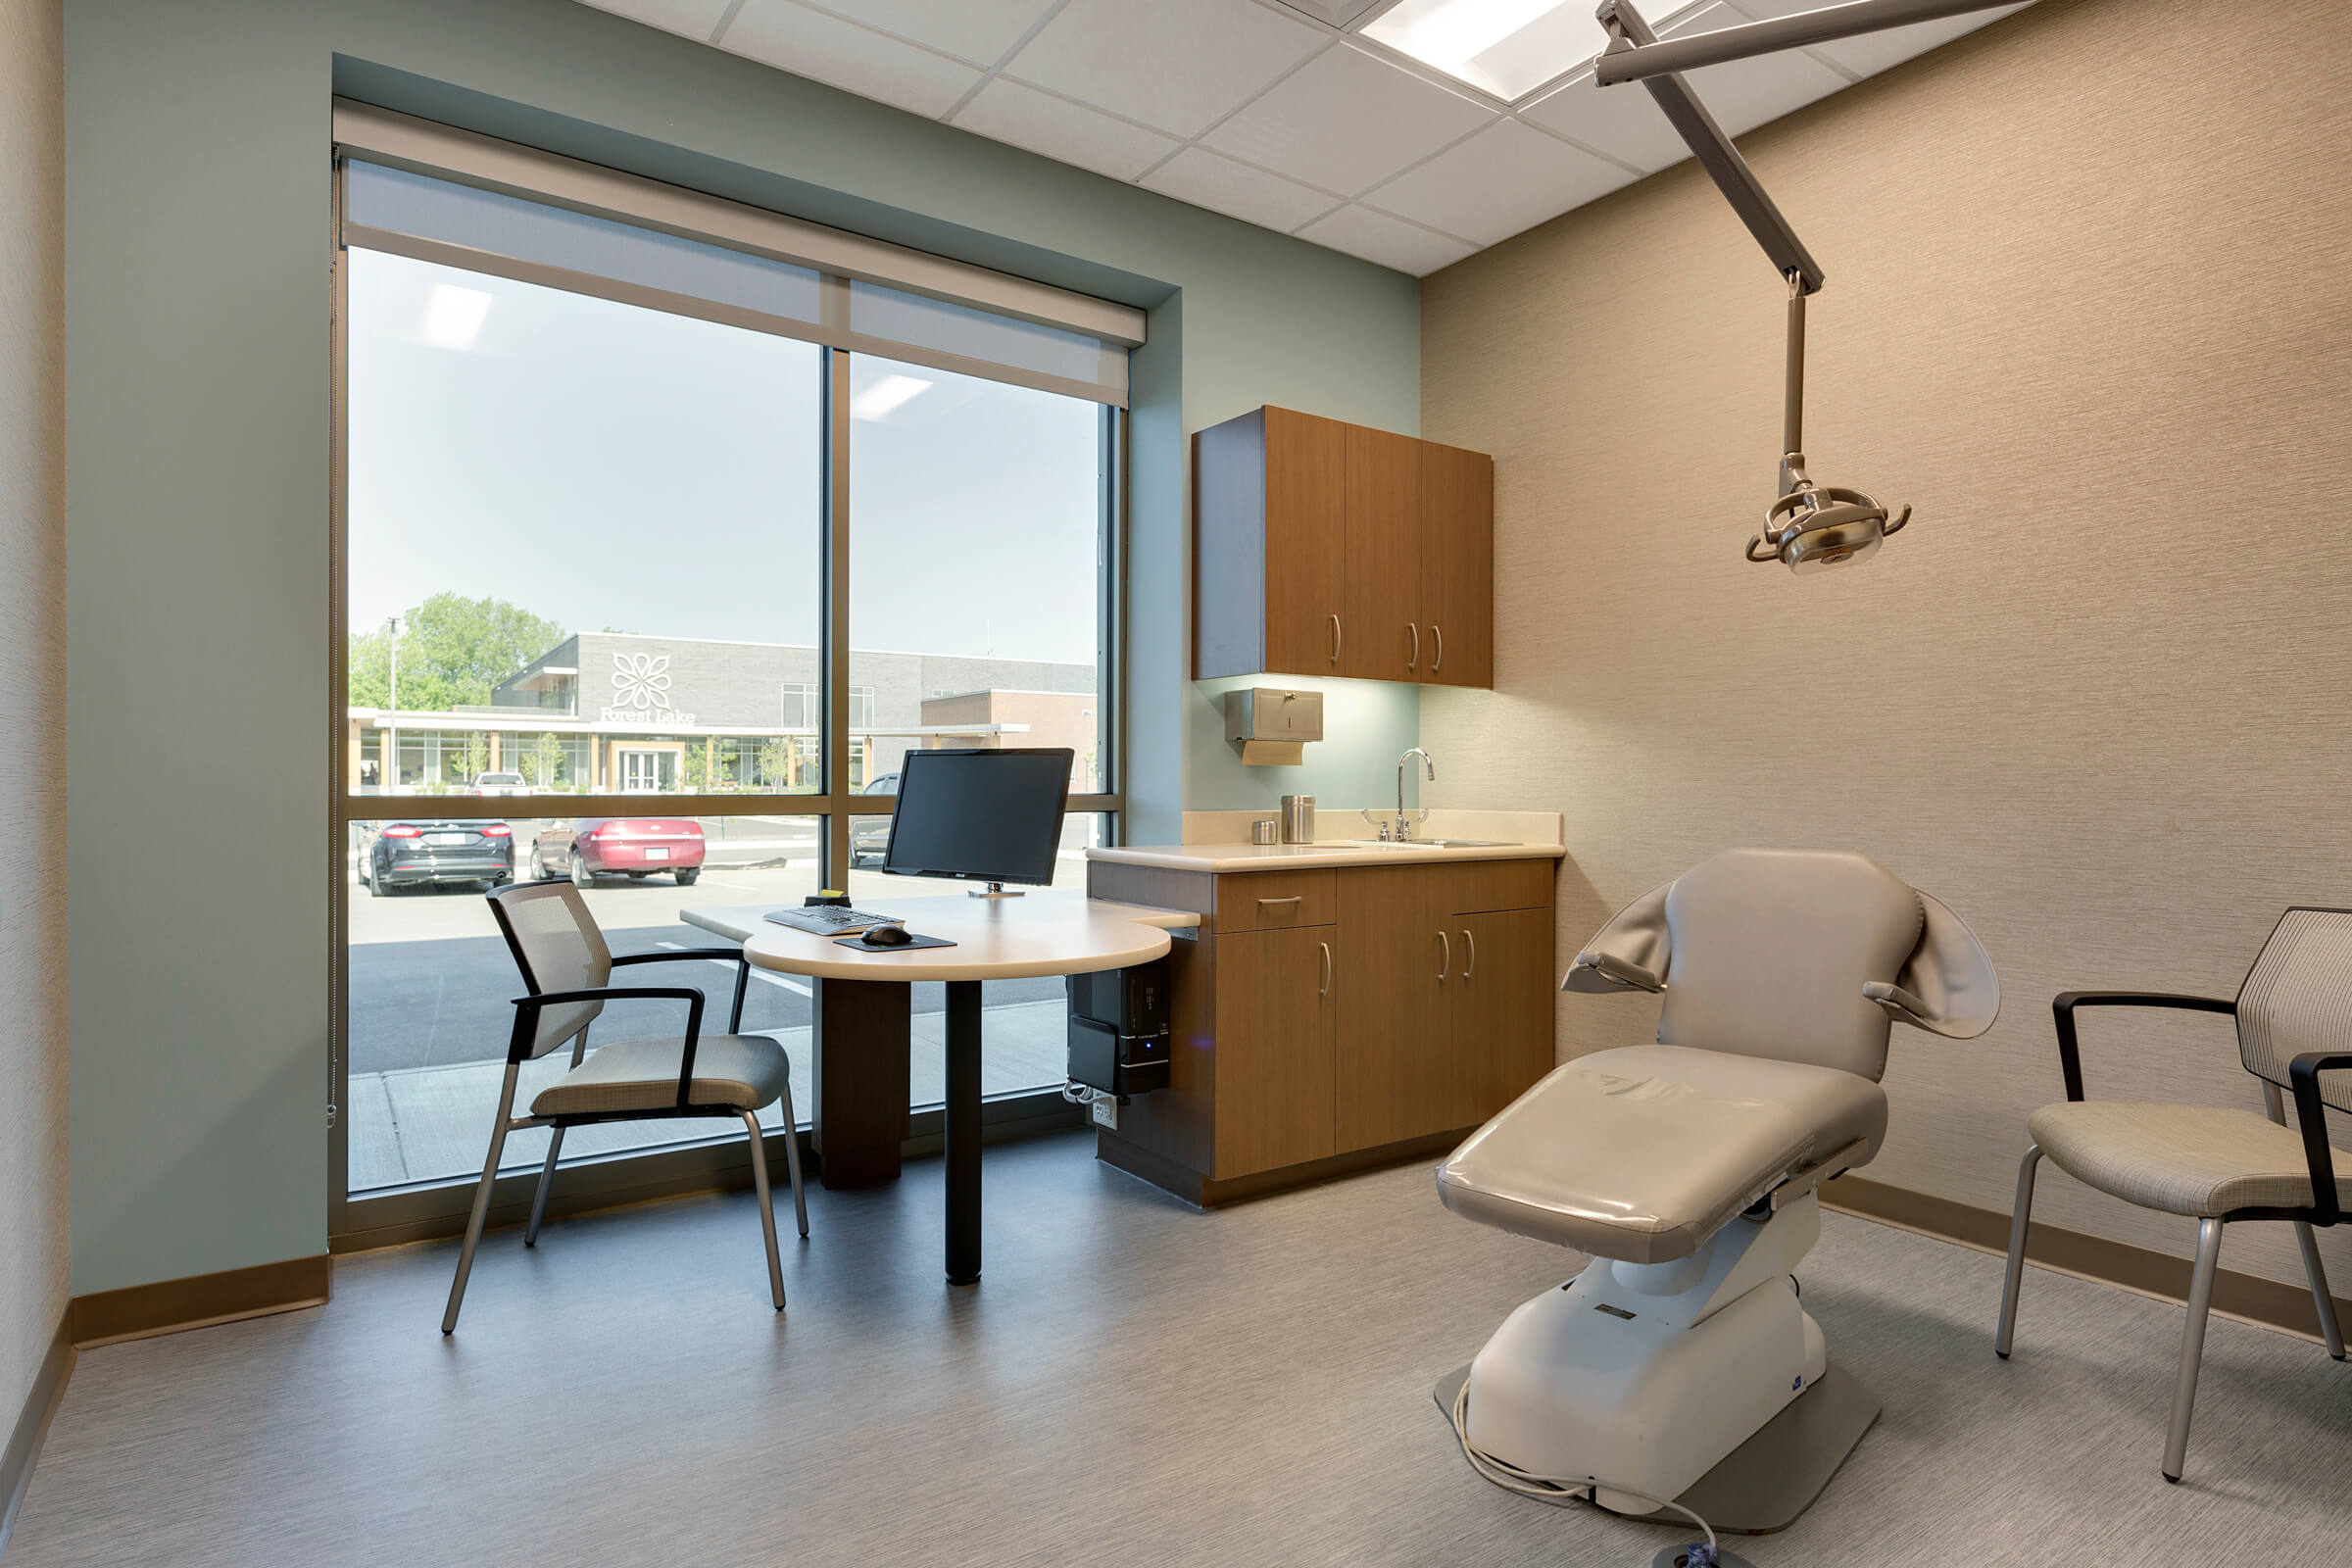 Maplewood Oral and Maxillofacial Surgery| Mohagen Hansen | Architecture | Interior Design | Minneapolis